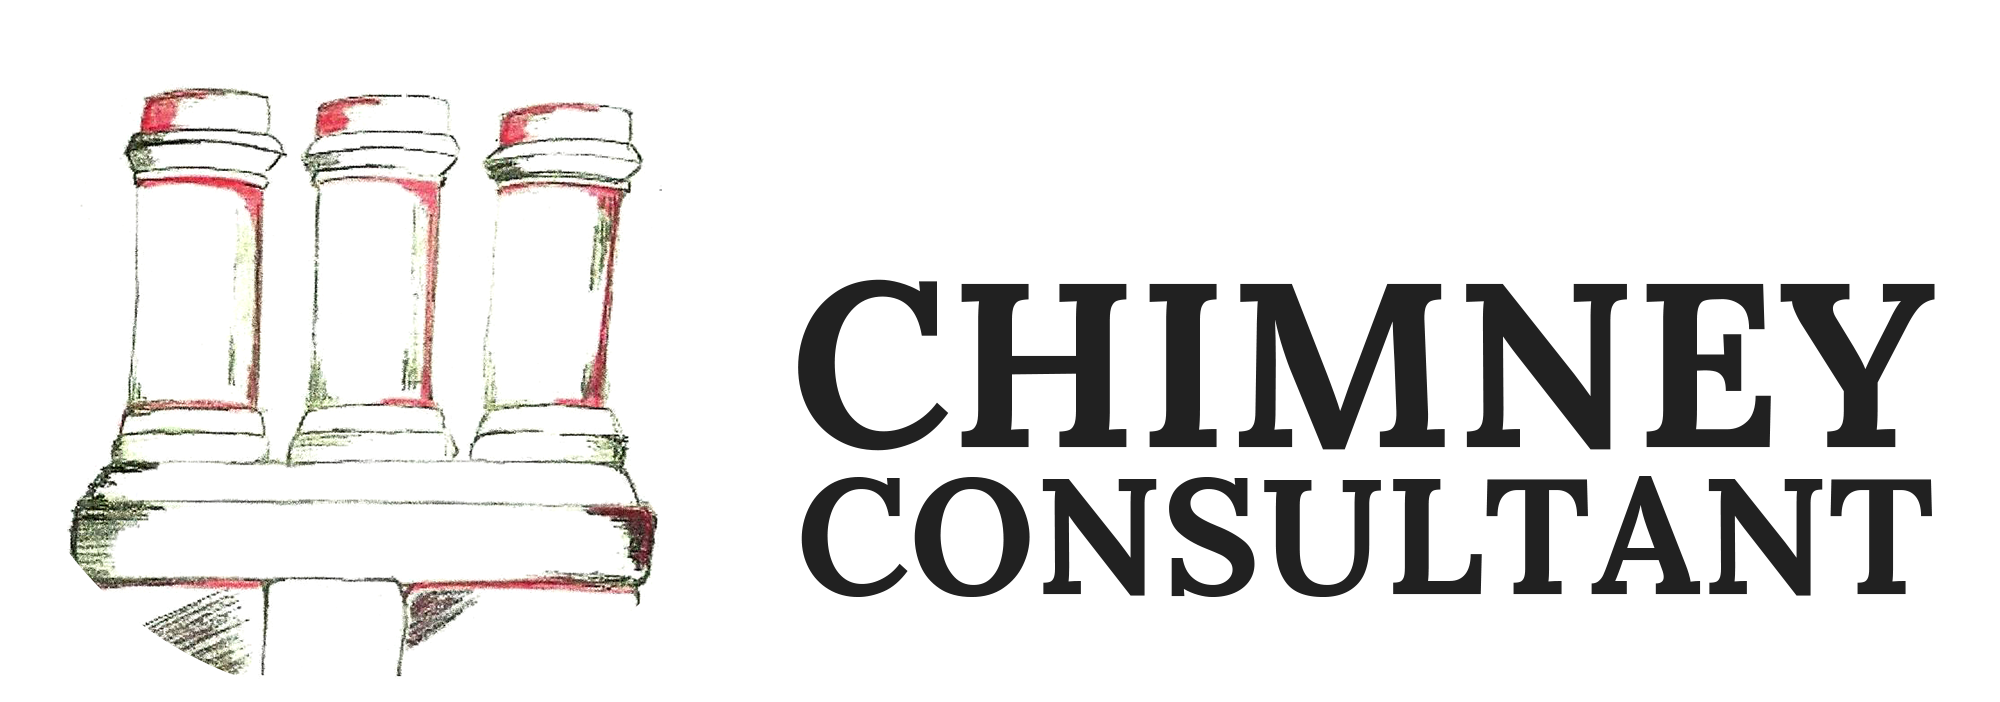 David Fleming Chimney Consultant logo